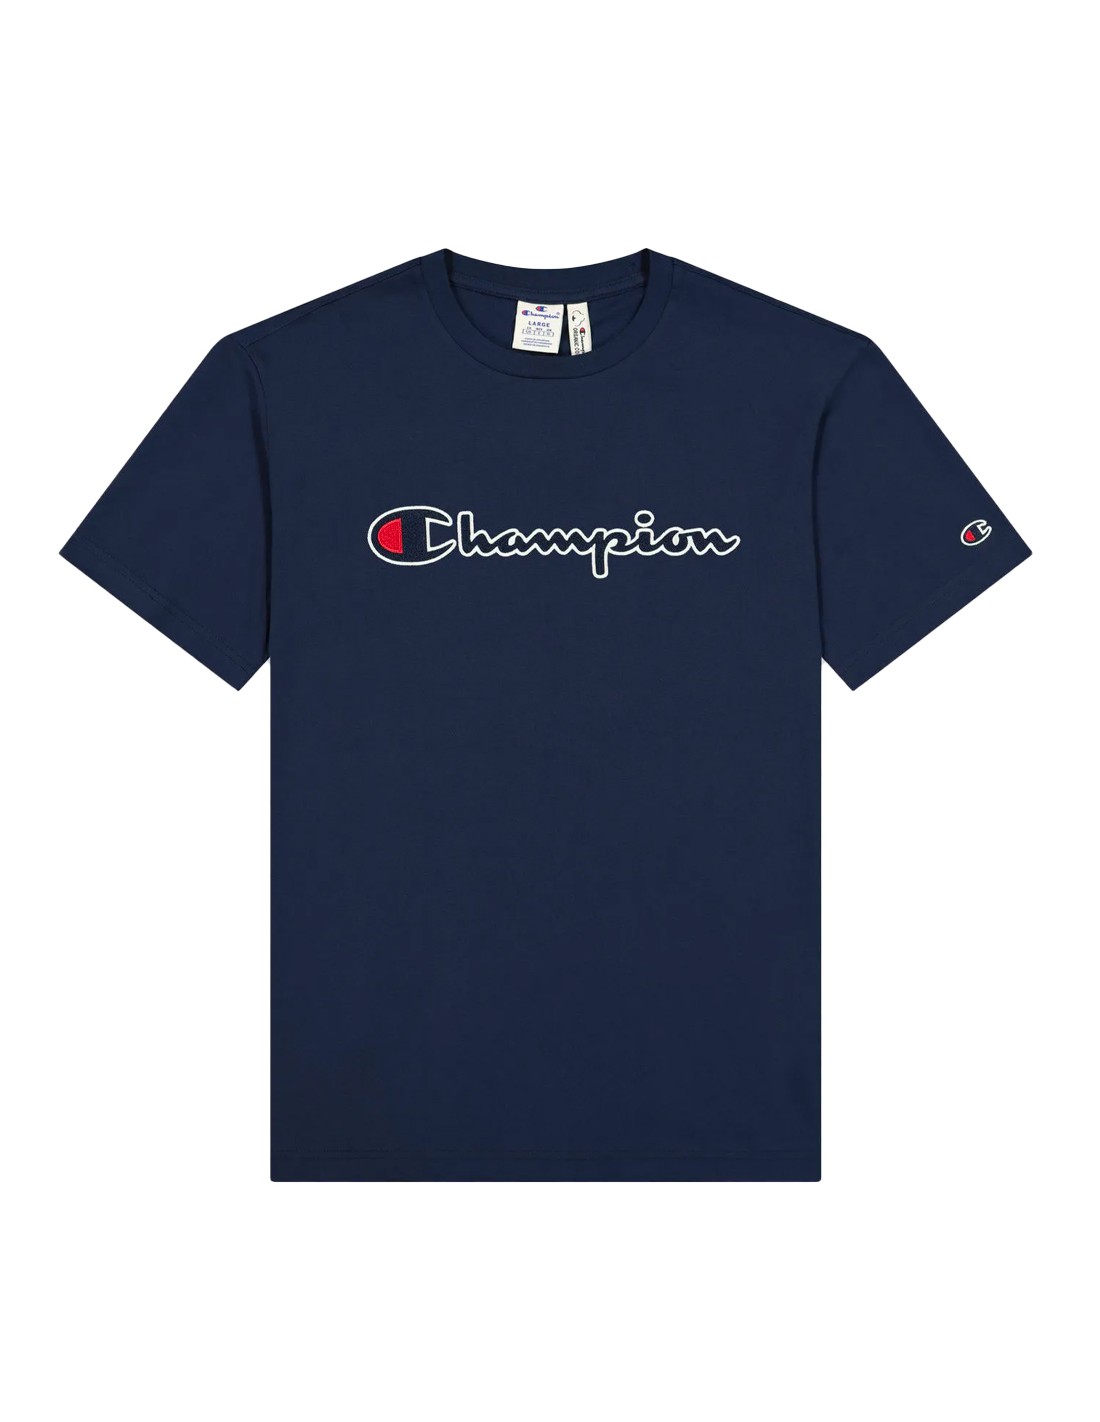 T-shirt CHAMPION - Navy - Rochester Logo